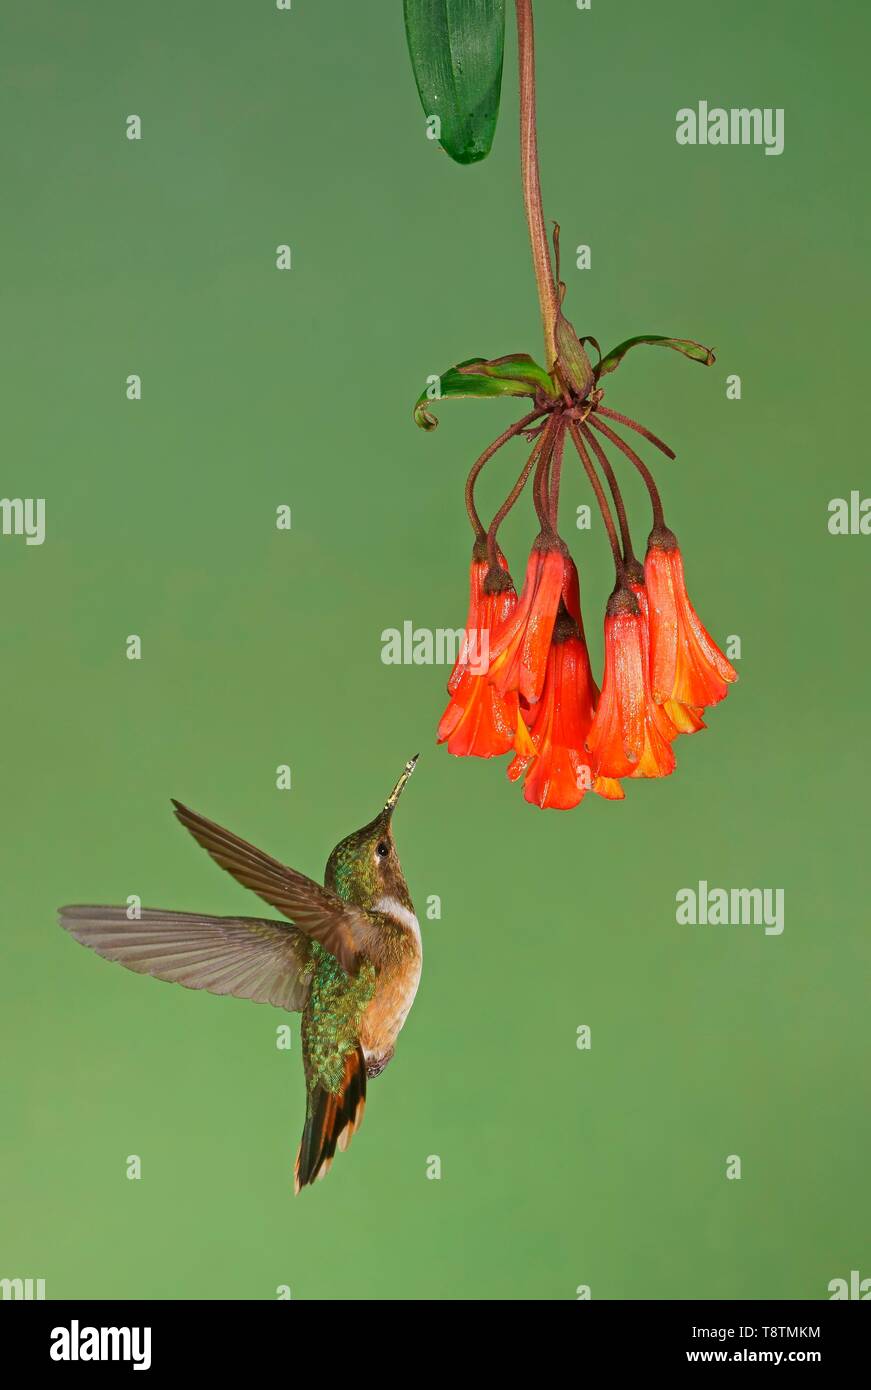 Volcanic elf (Selaphorus flammula) in flight, drinking nectar on a red flower, Costa Rica Stock Photo